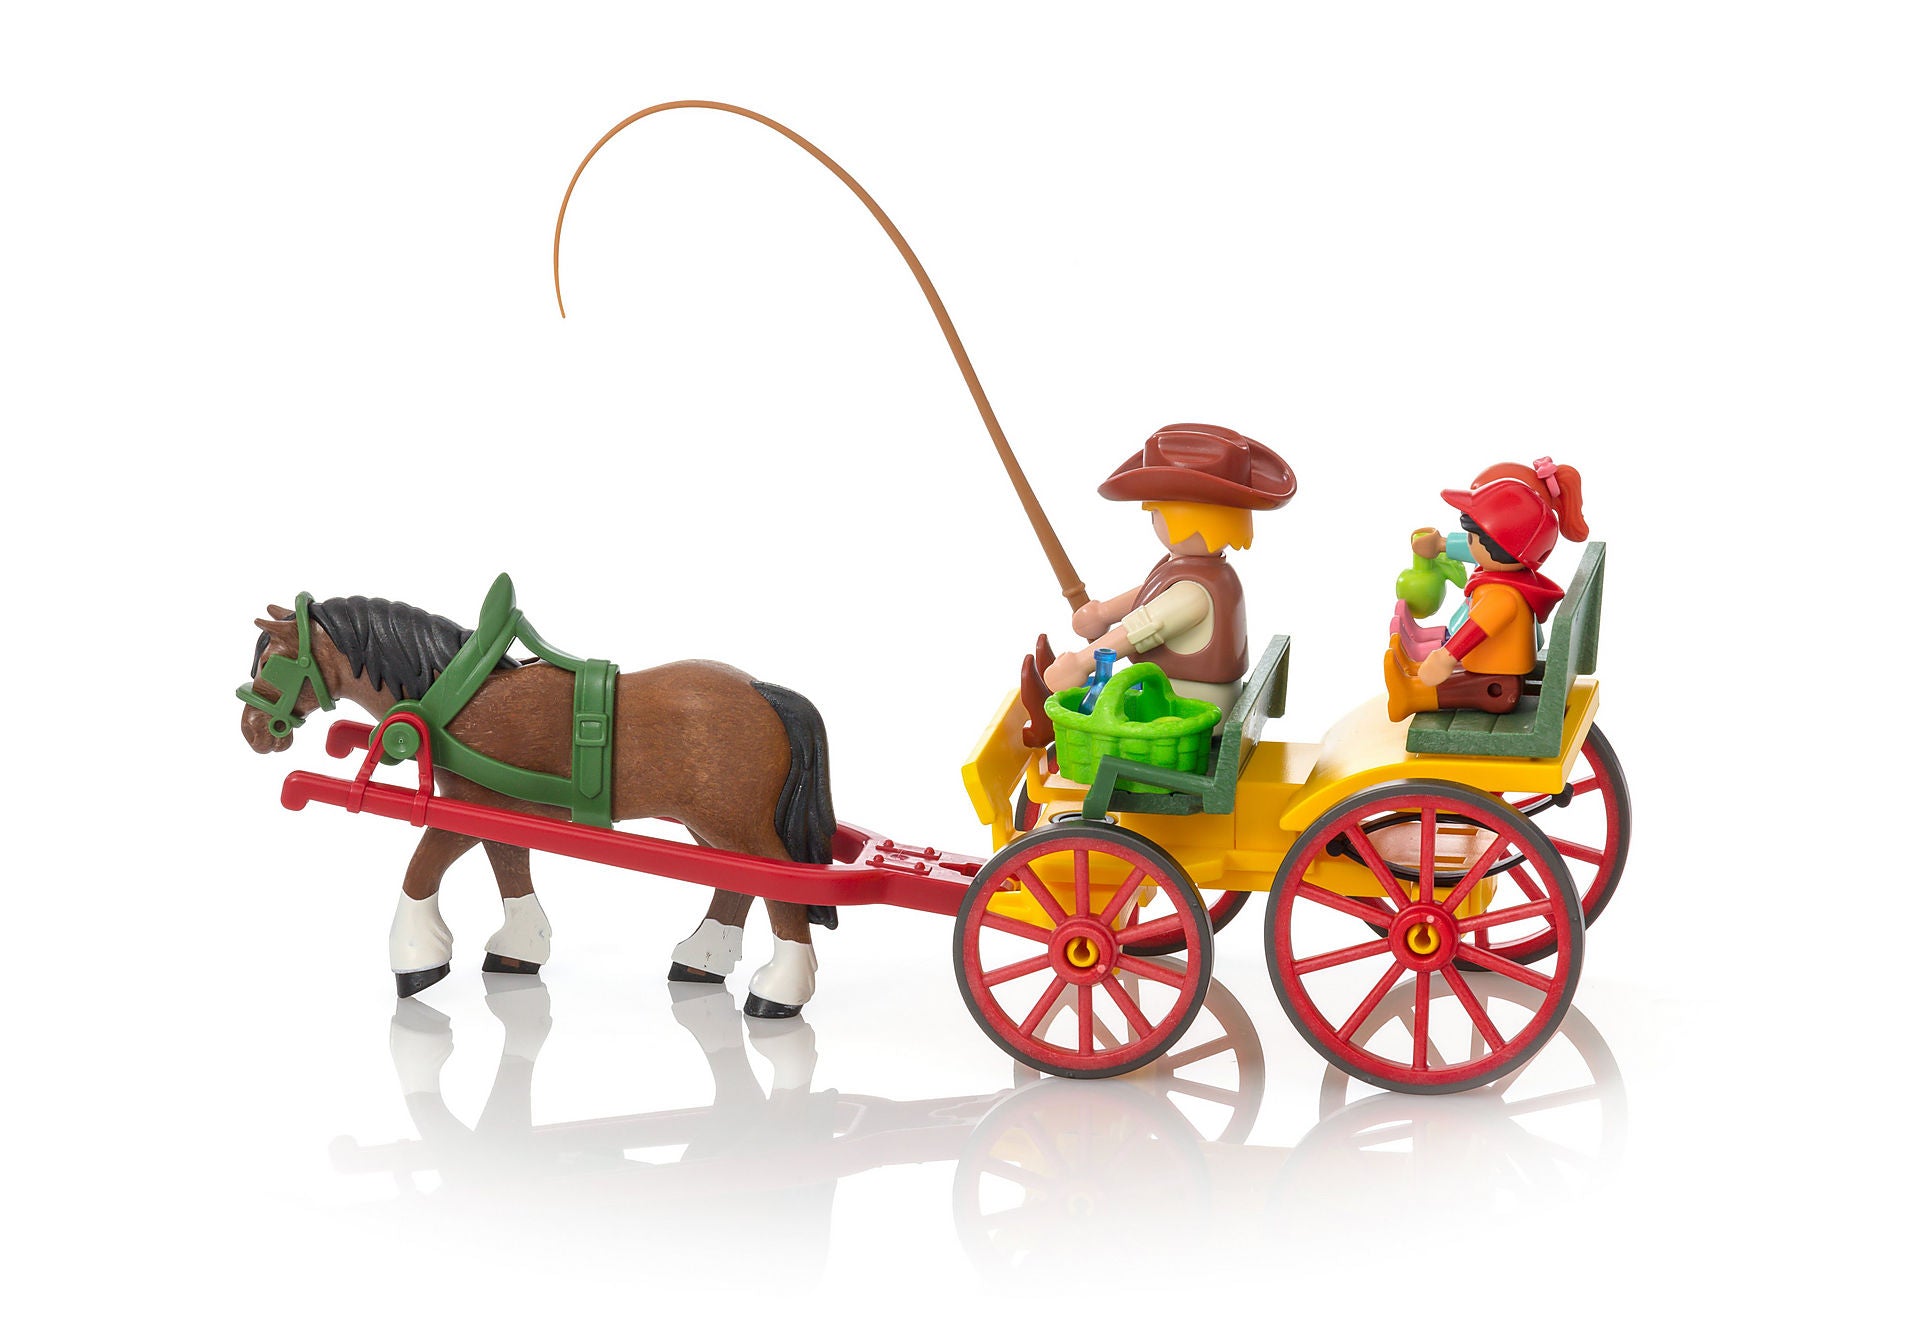 Playmobil 123 Horse-drawn wagon and girl